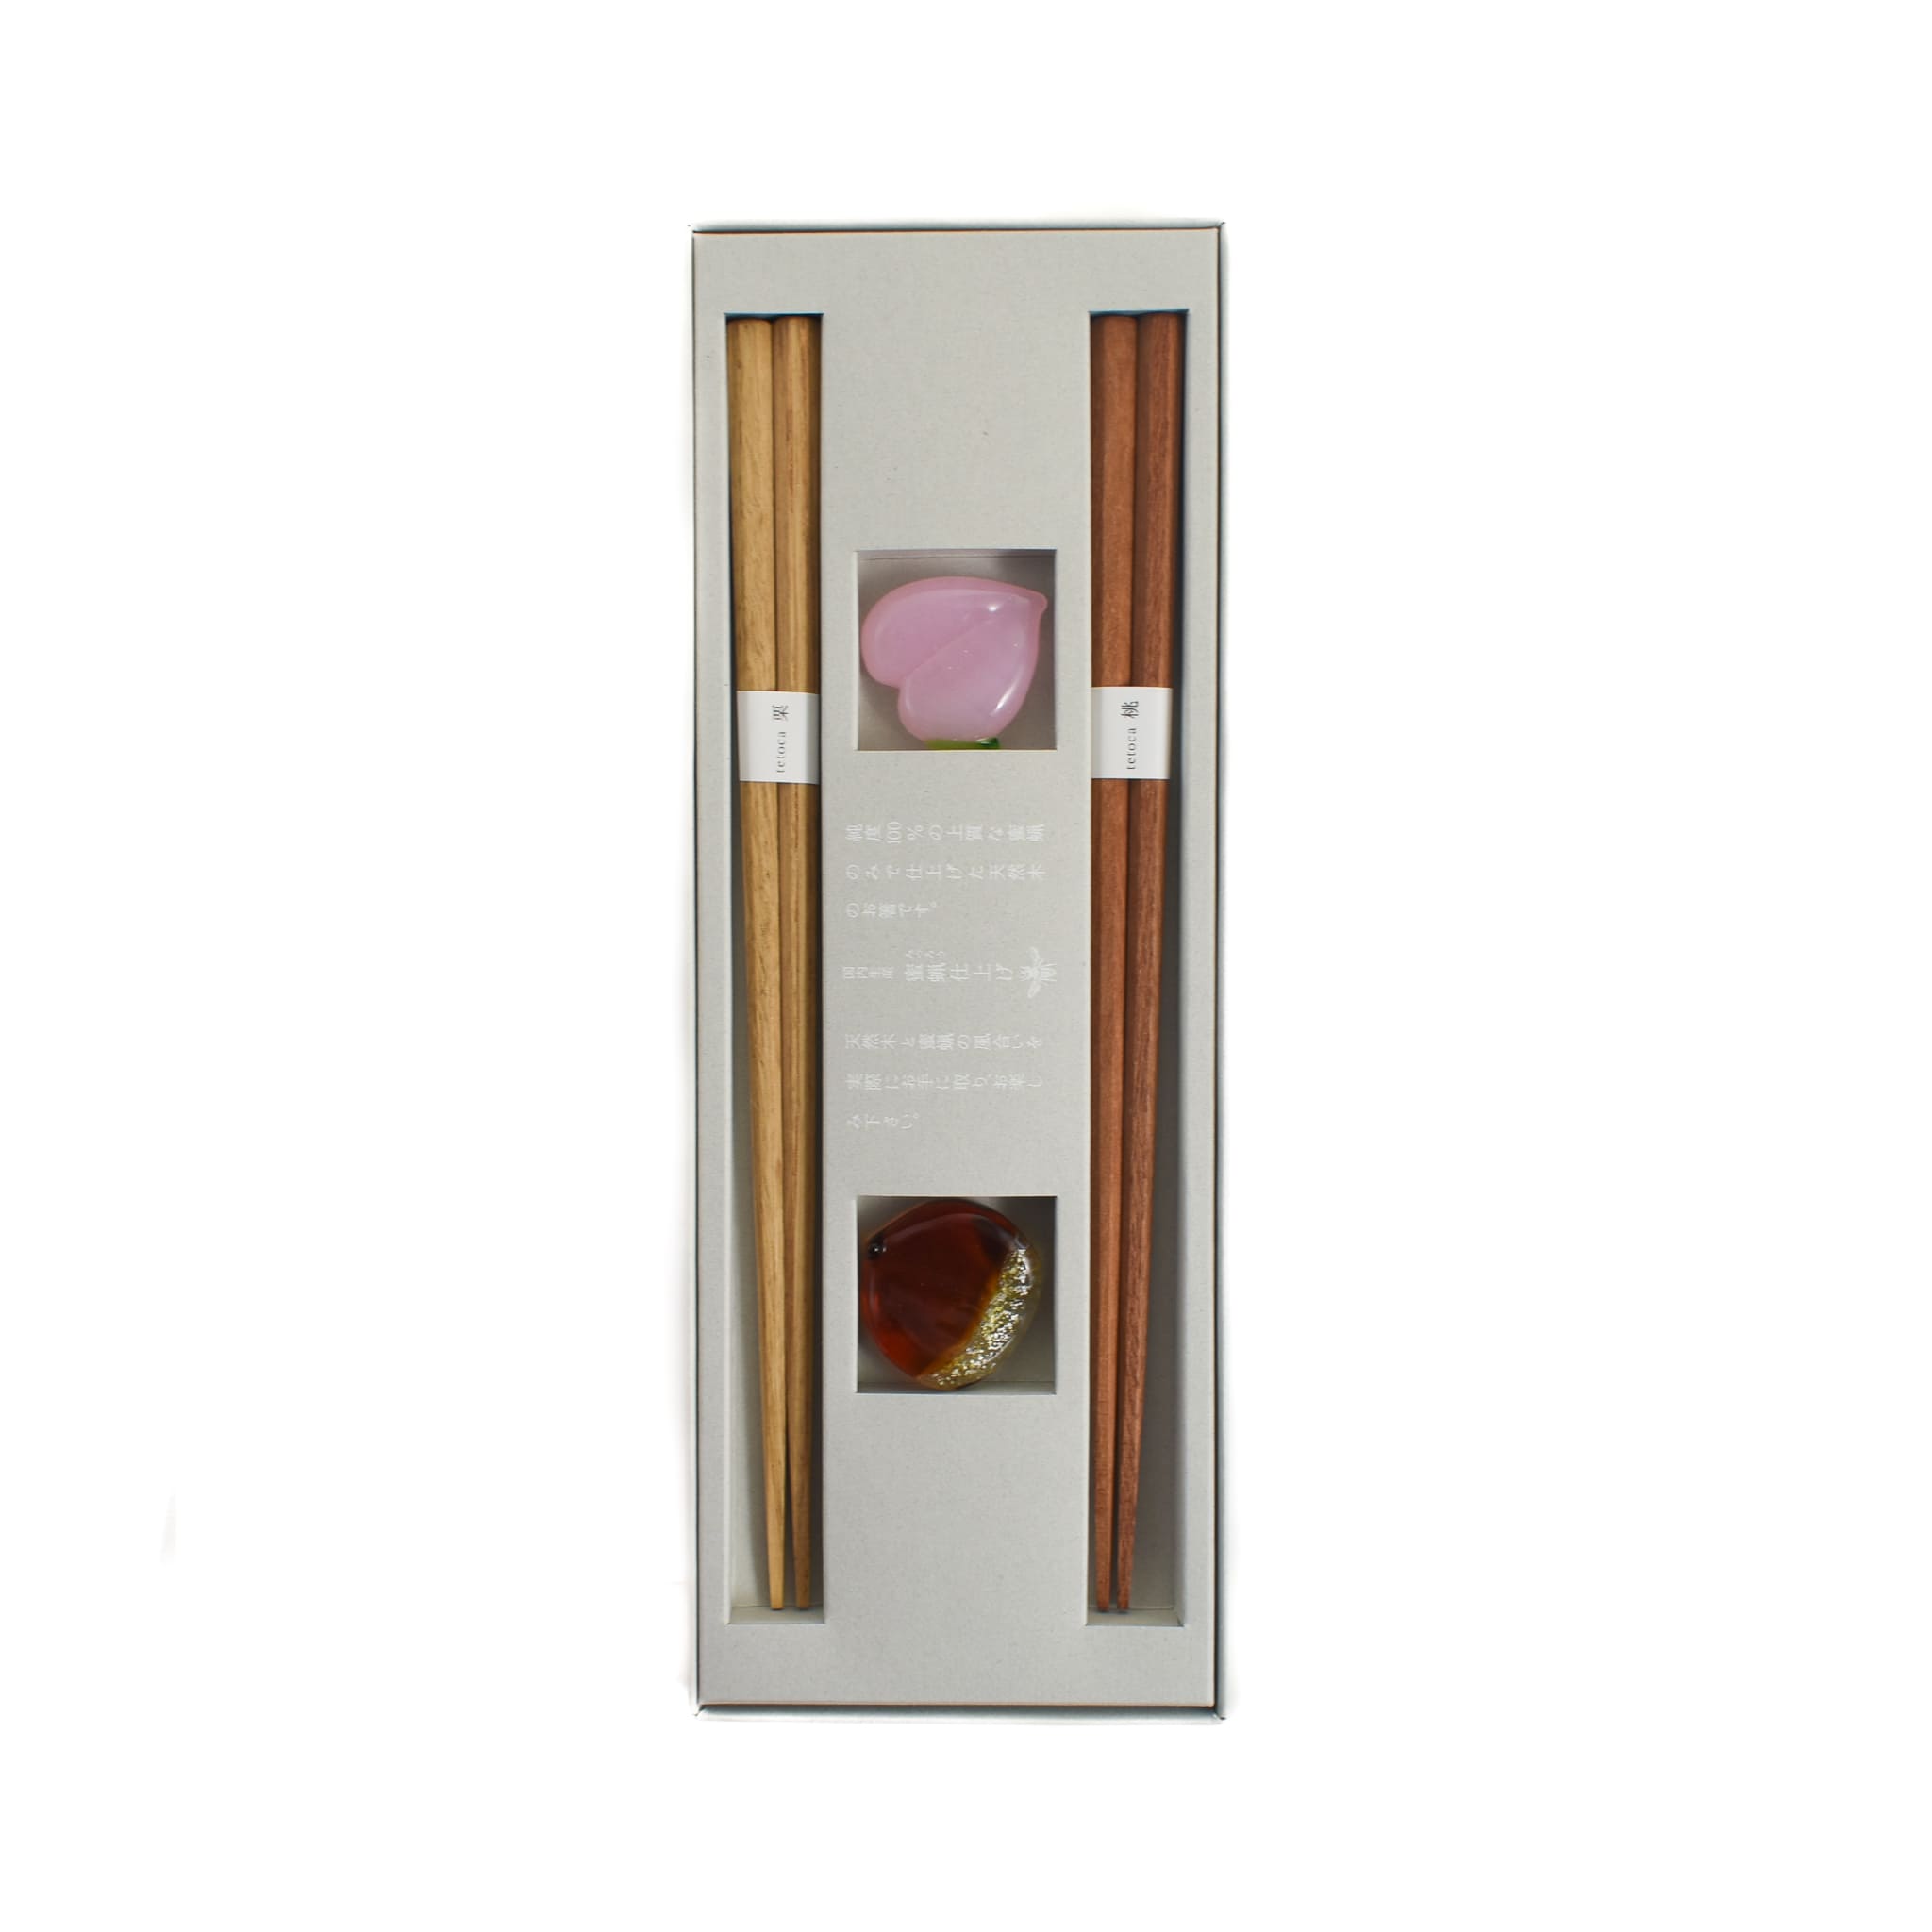 Chestnut & Peach Wood Chopstick Gift Set with Rests, 18cm